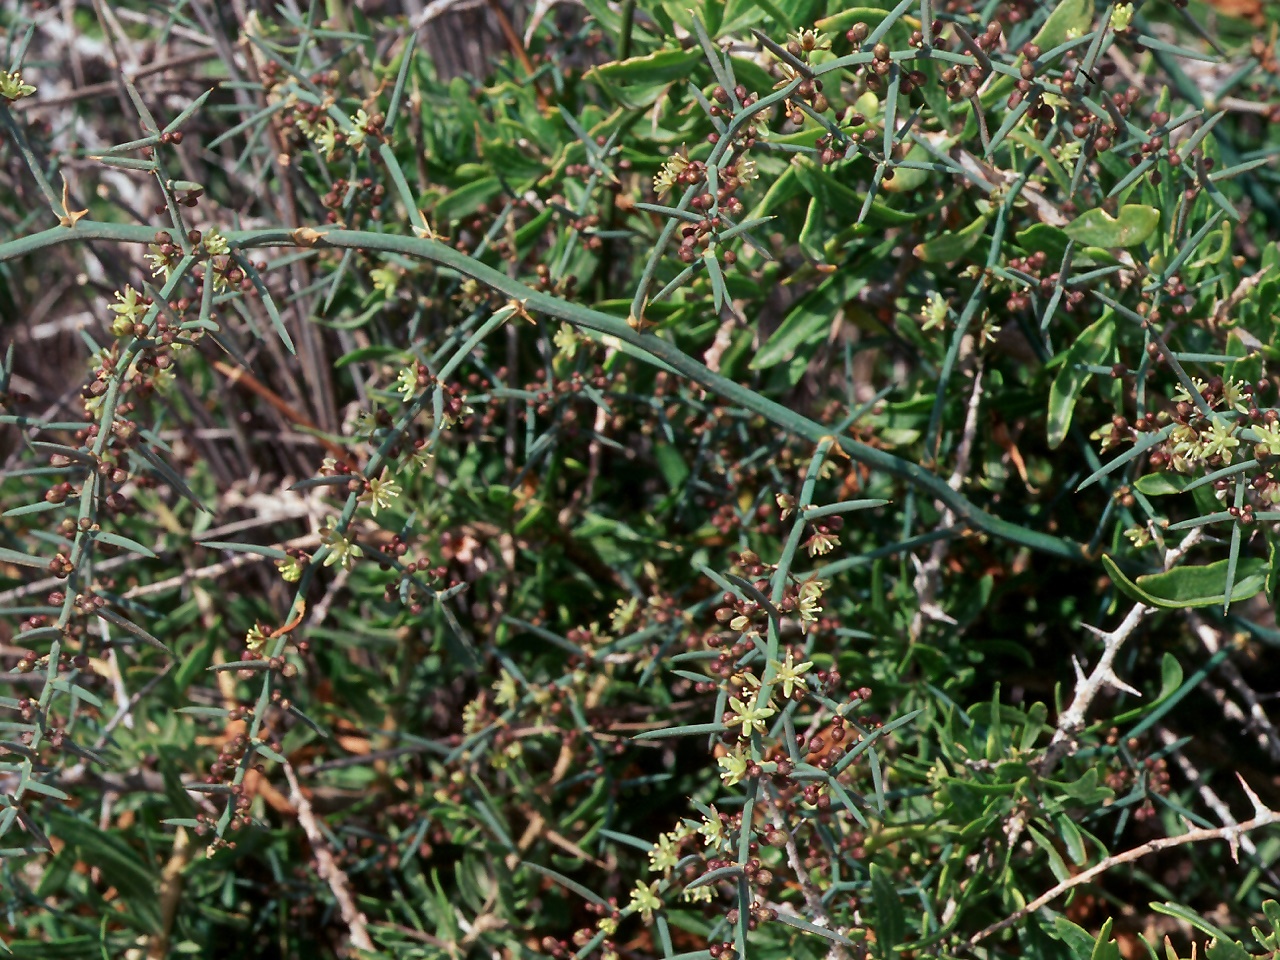 Asparagus stipularis